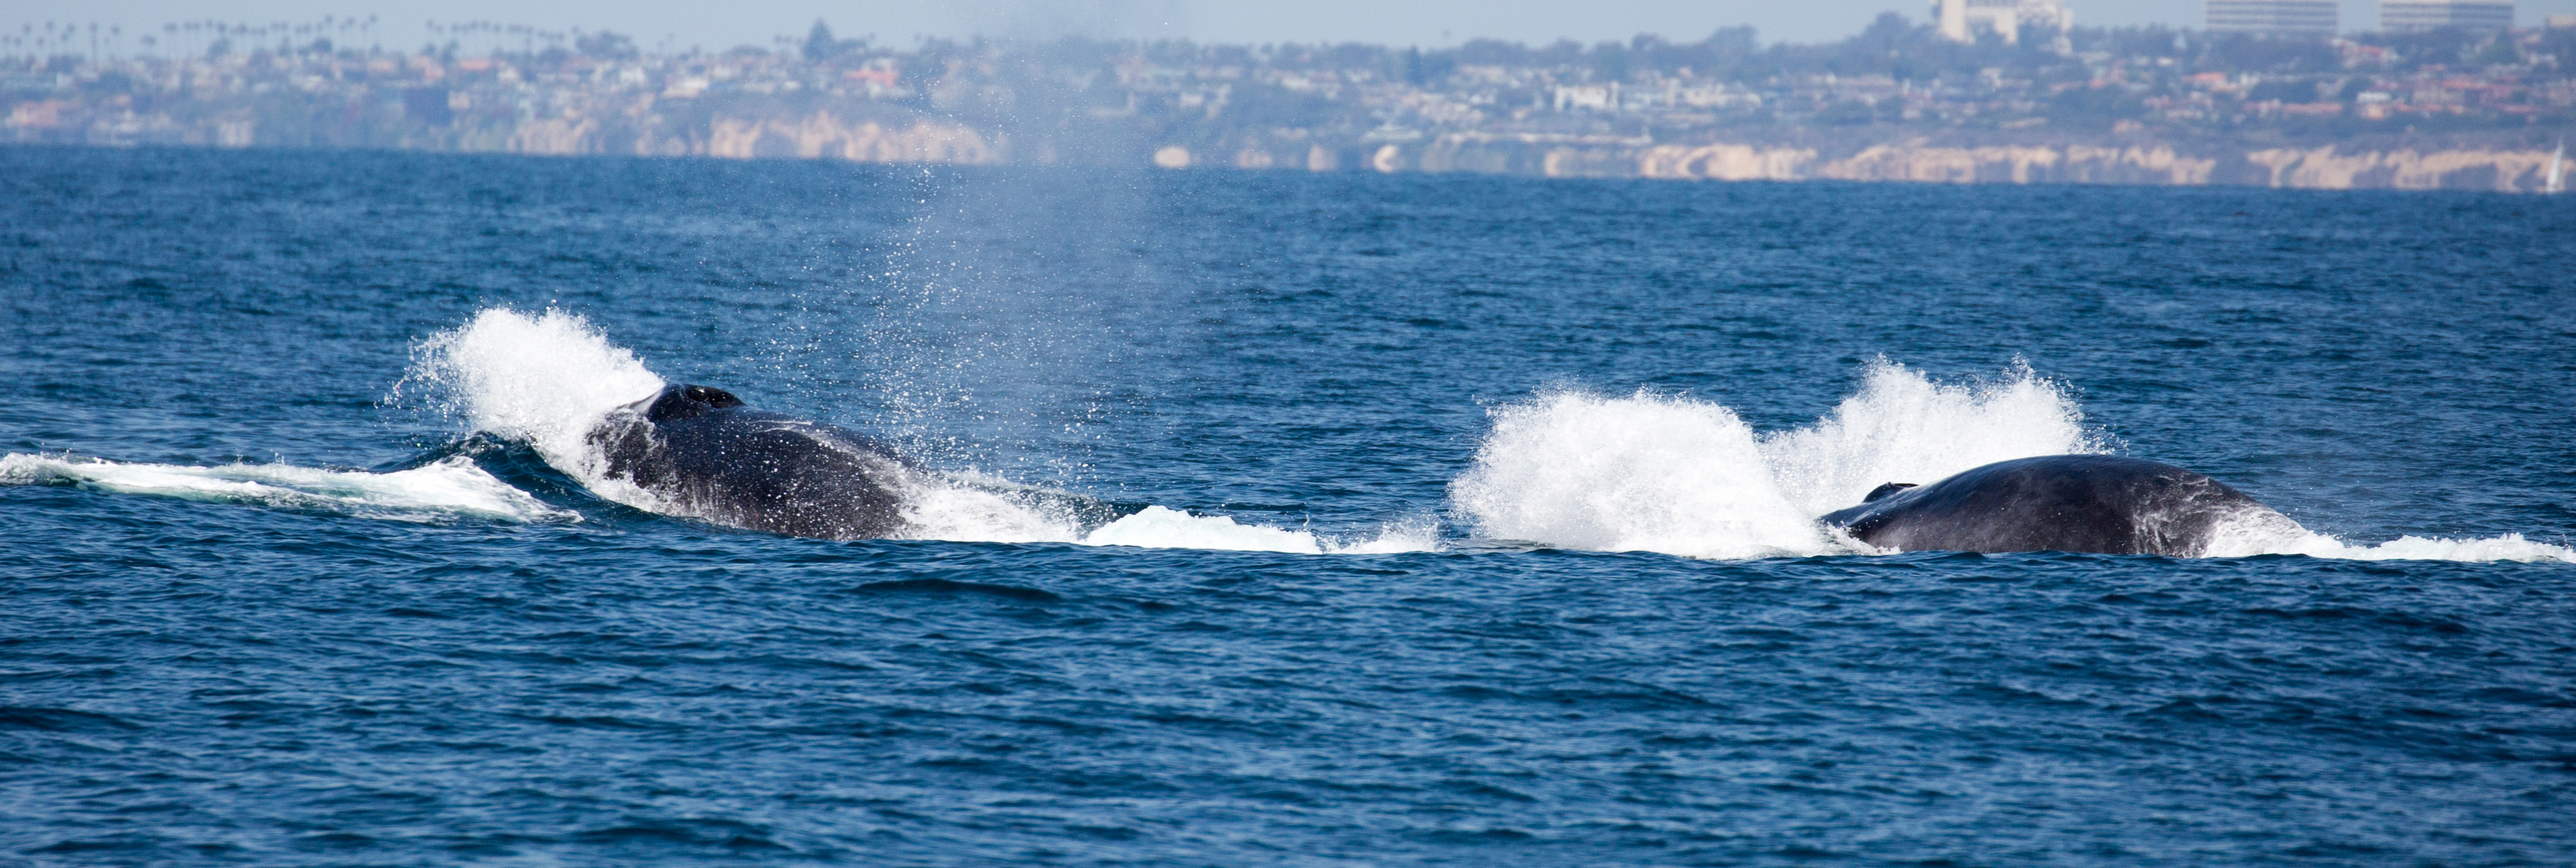 finback-whale-watching-catalina-island-tours